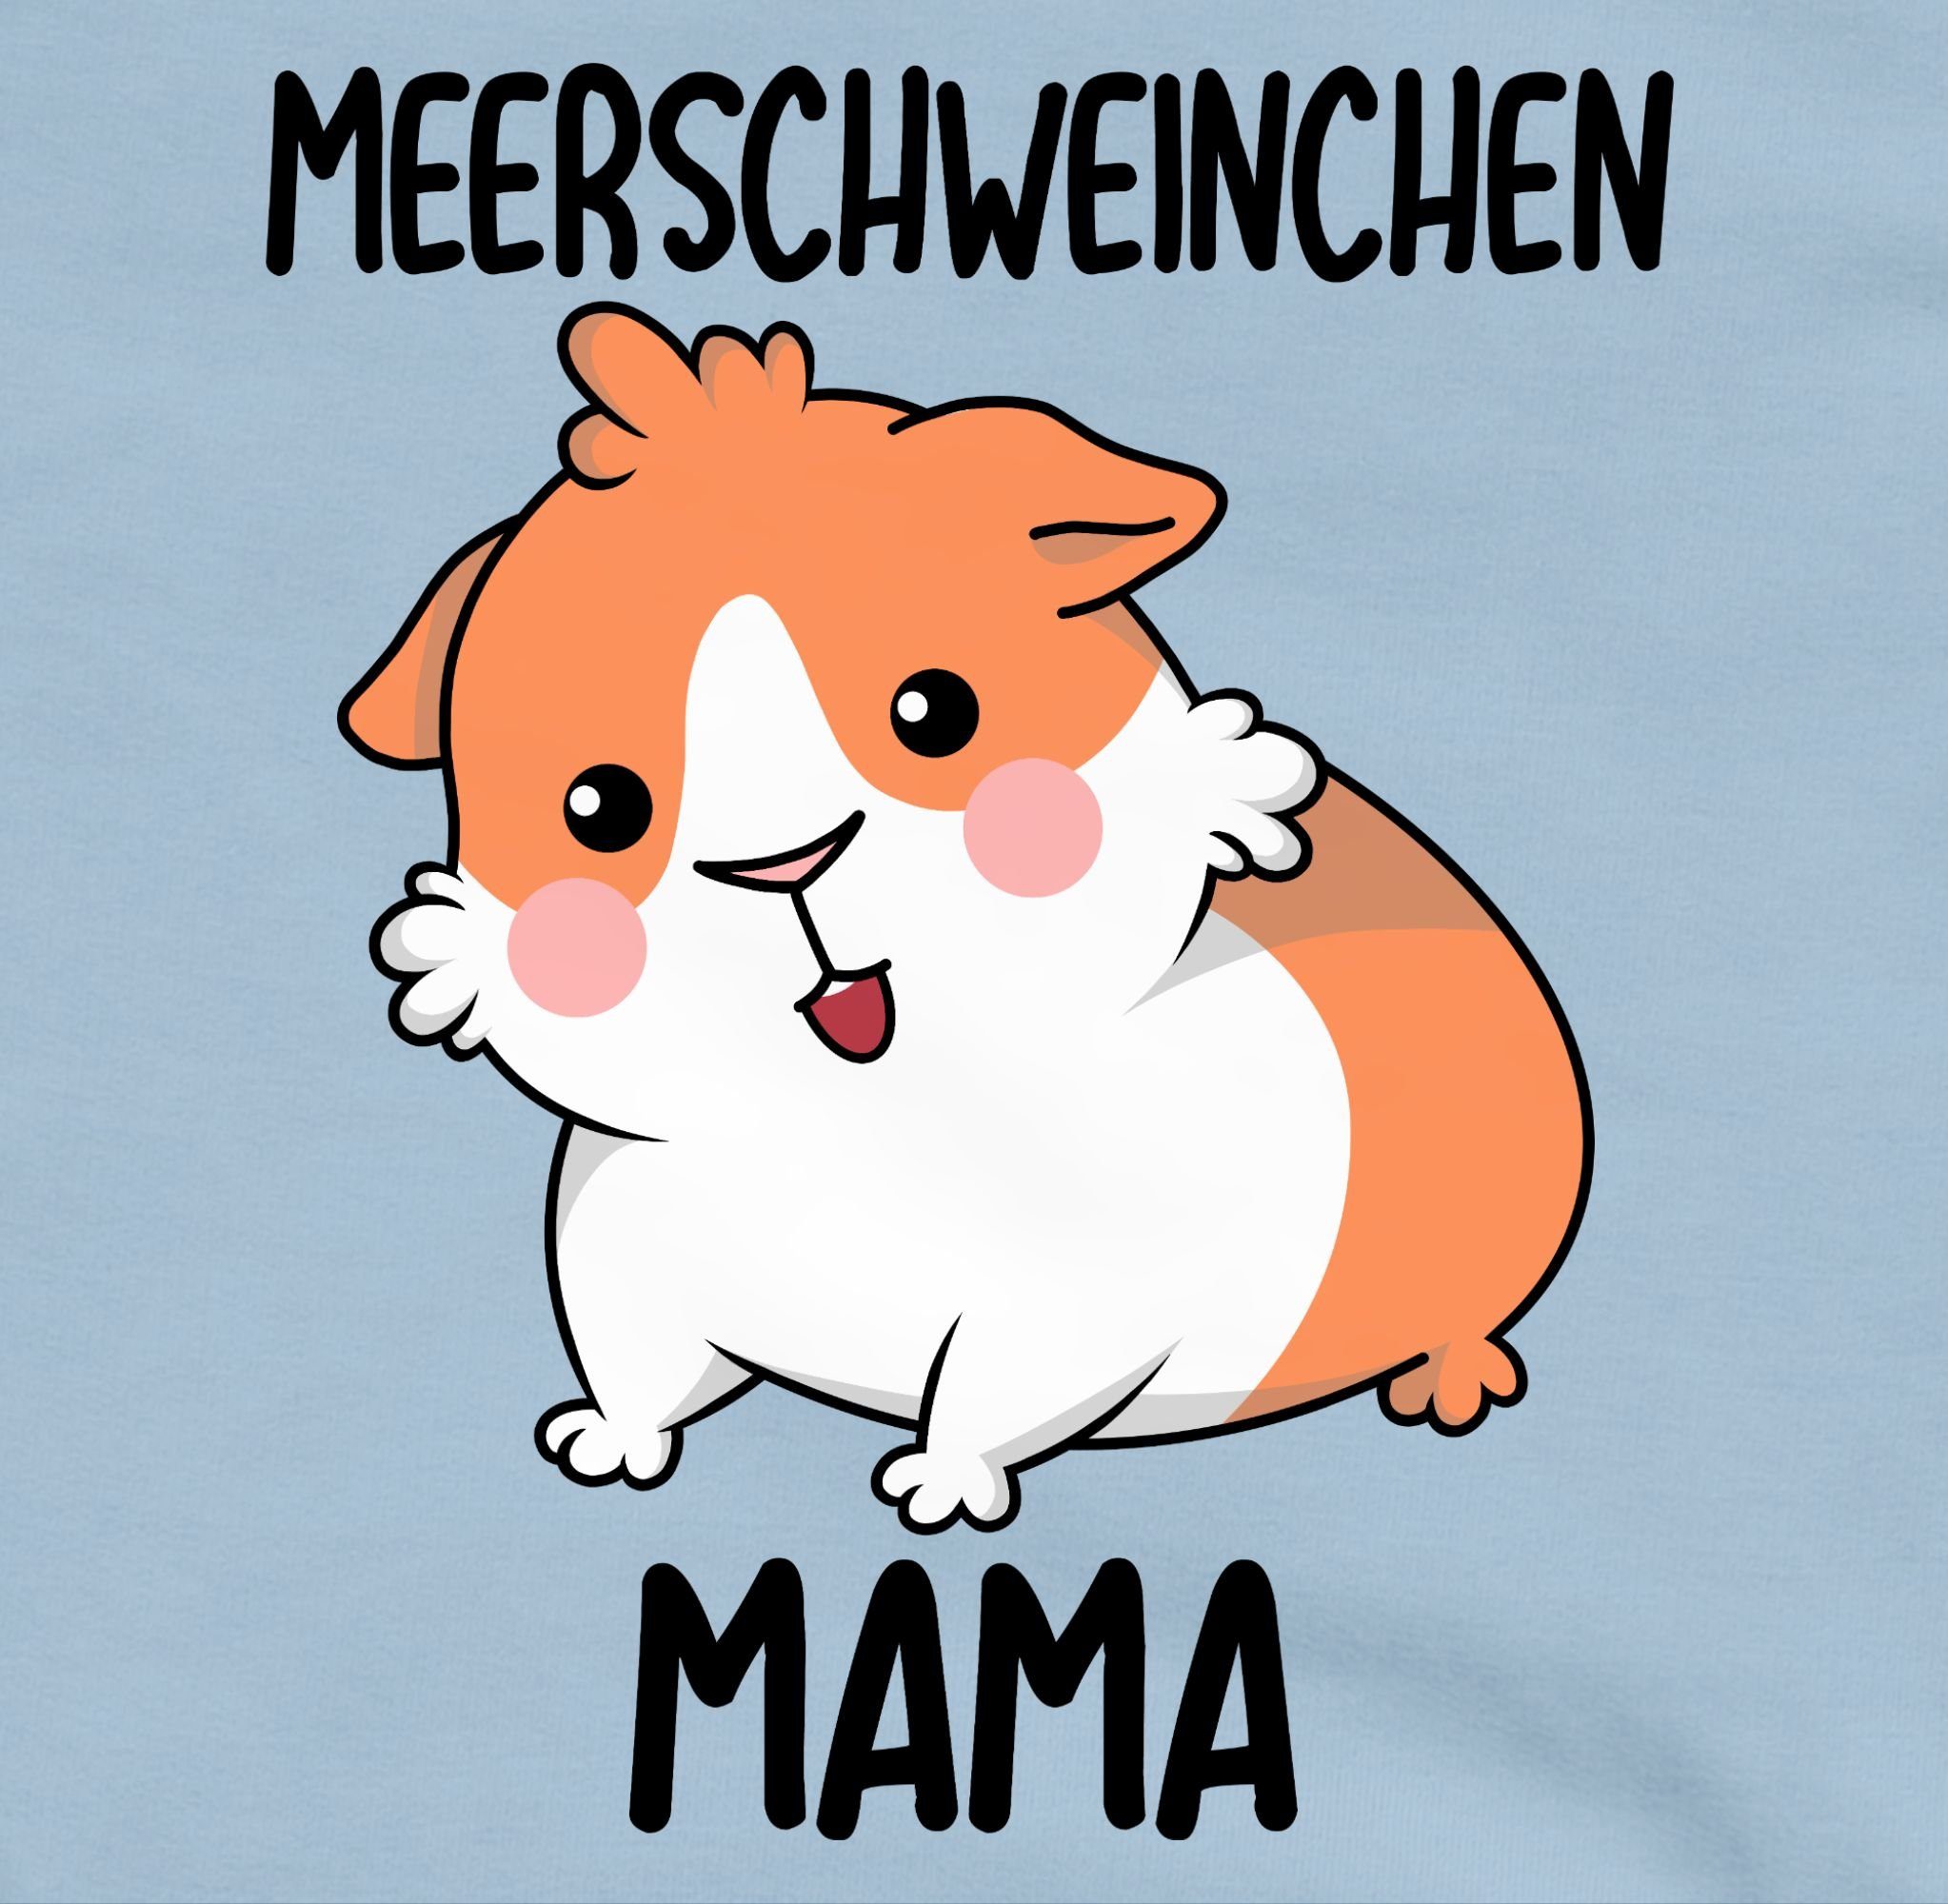 Meerschweinchen Sweatshirt Print Hellblau 2 Shirtracer Tiermotiv Mama Animal